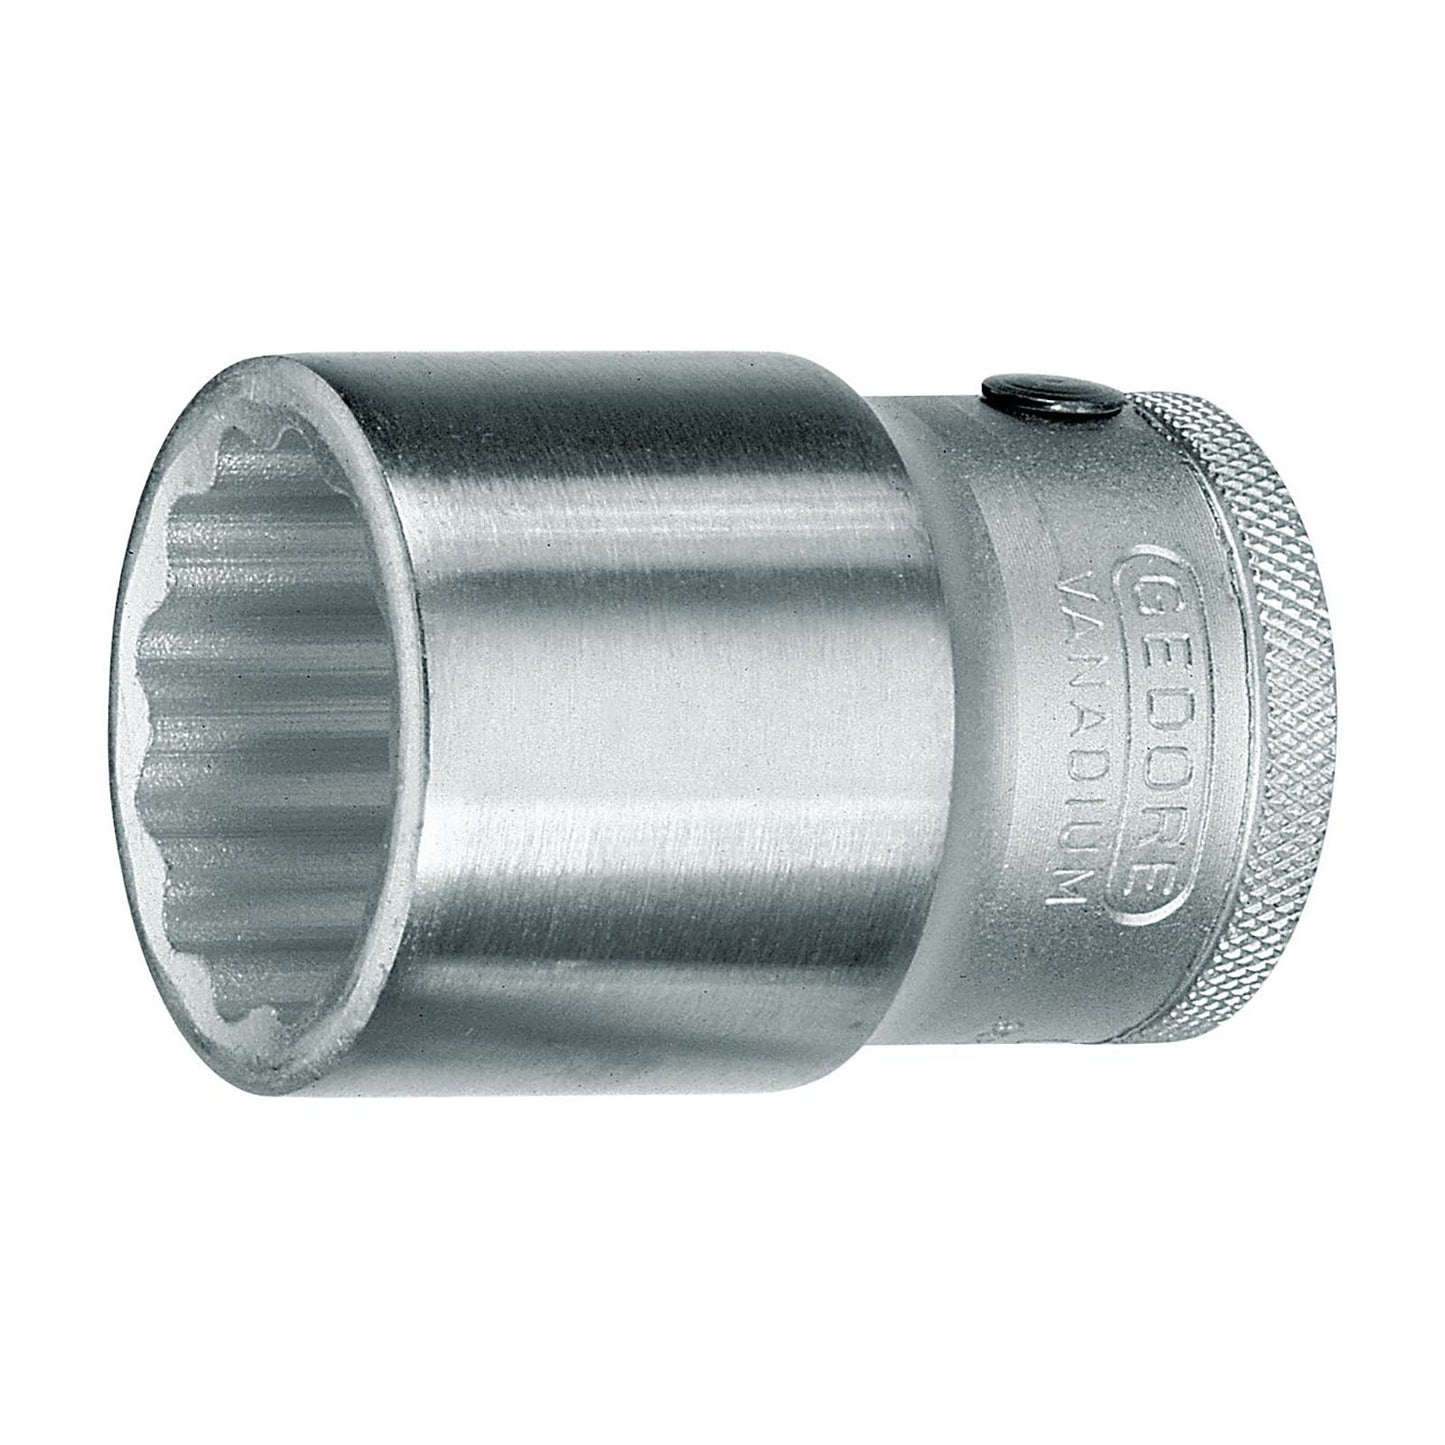 GEDORE D 32 27 - Unit Drive Socket 3/4", 27 mm (6272400)